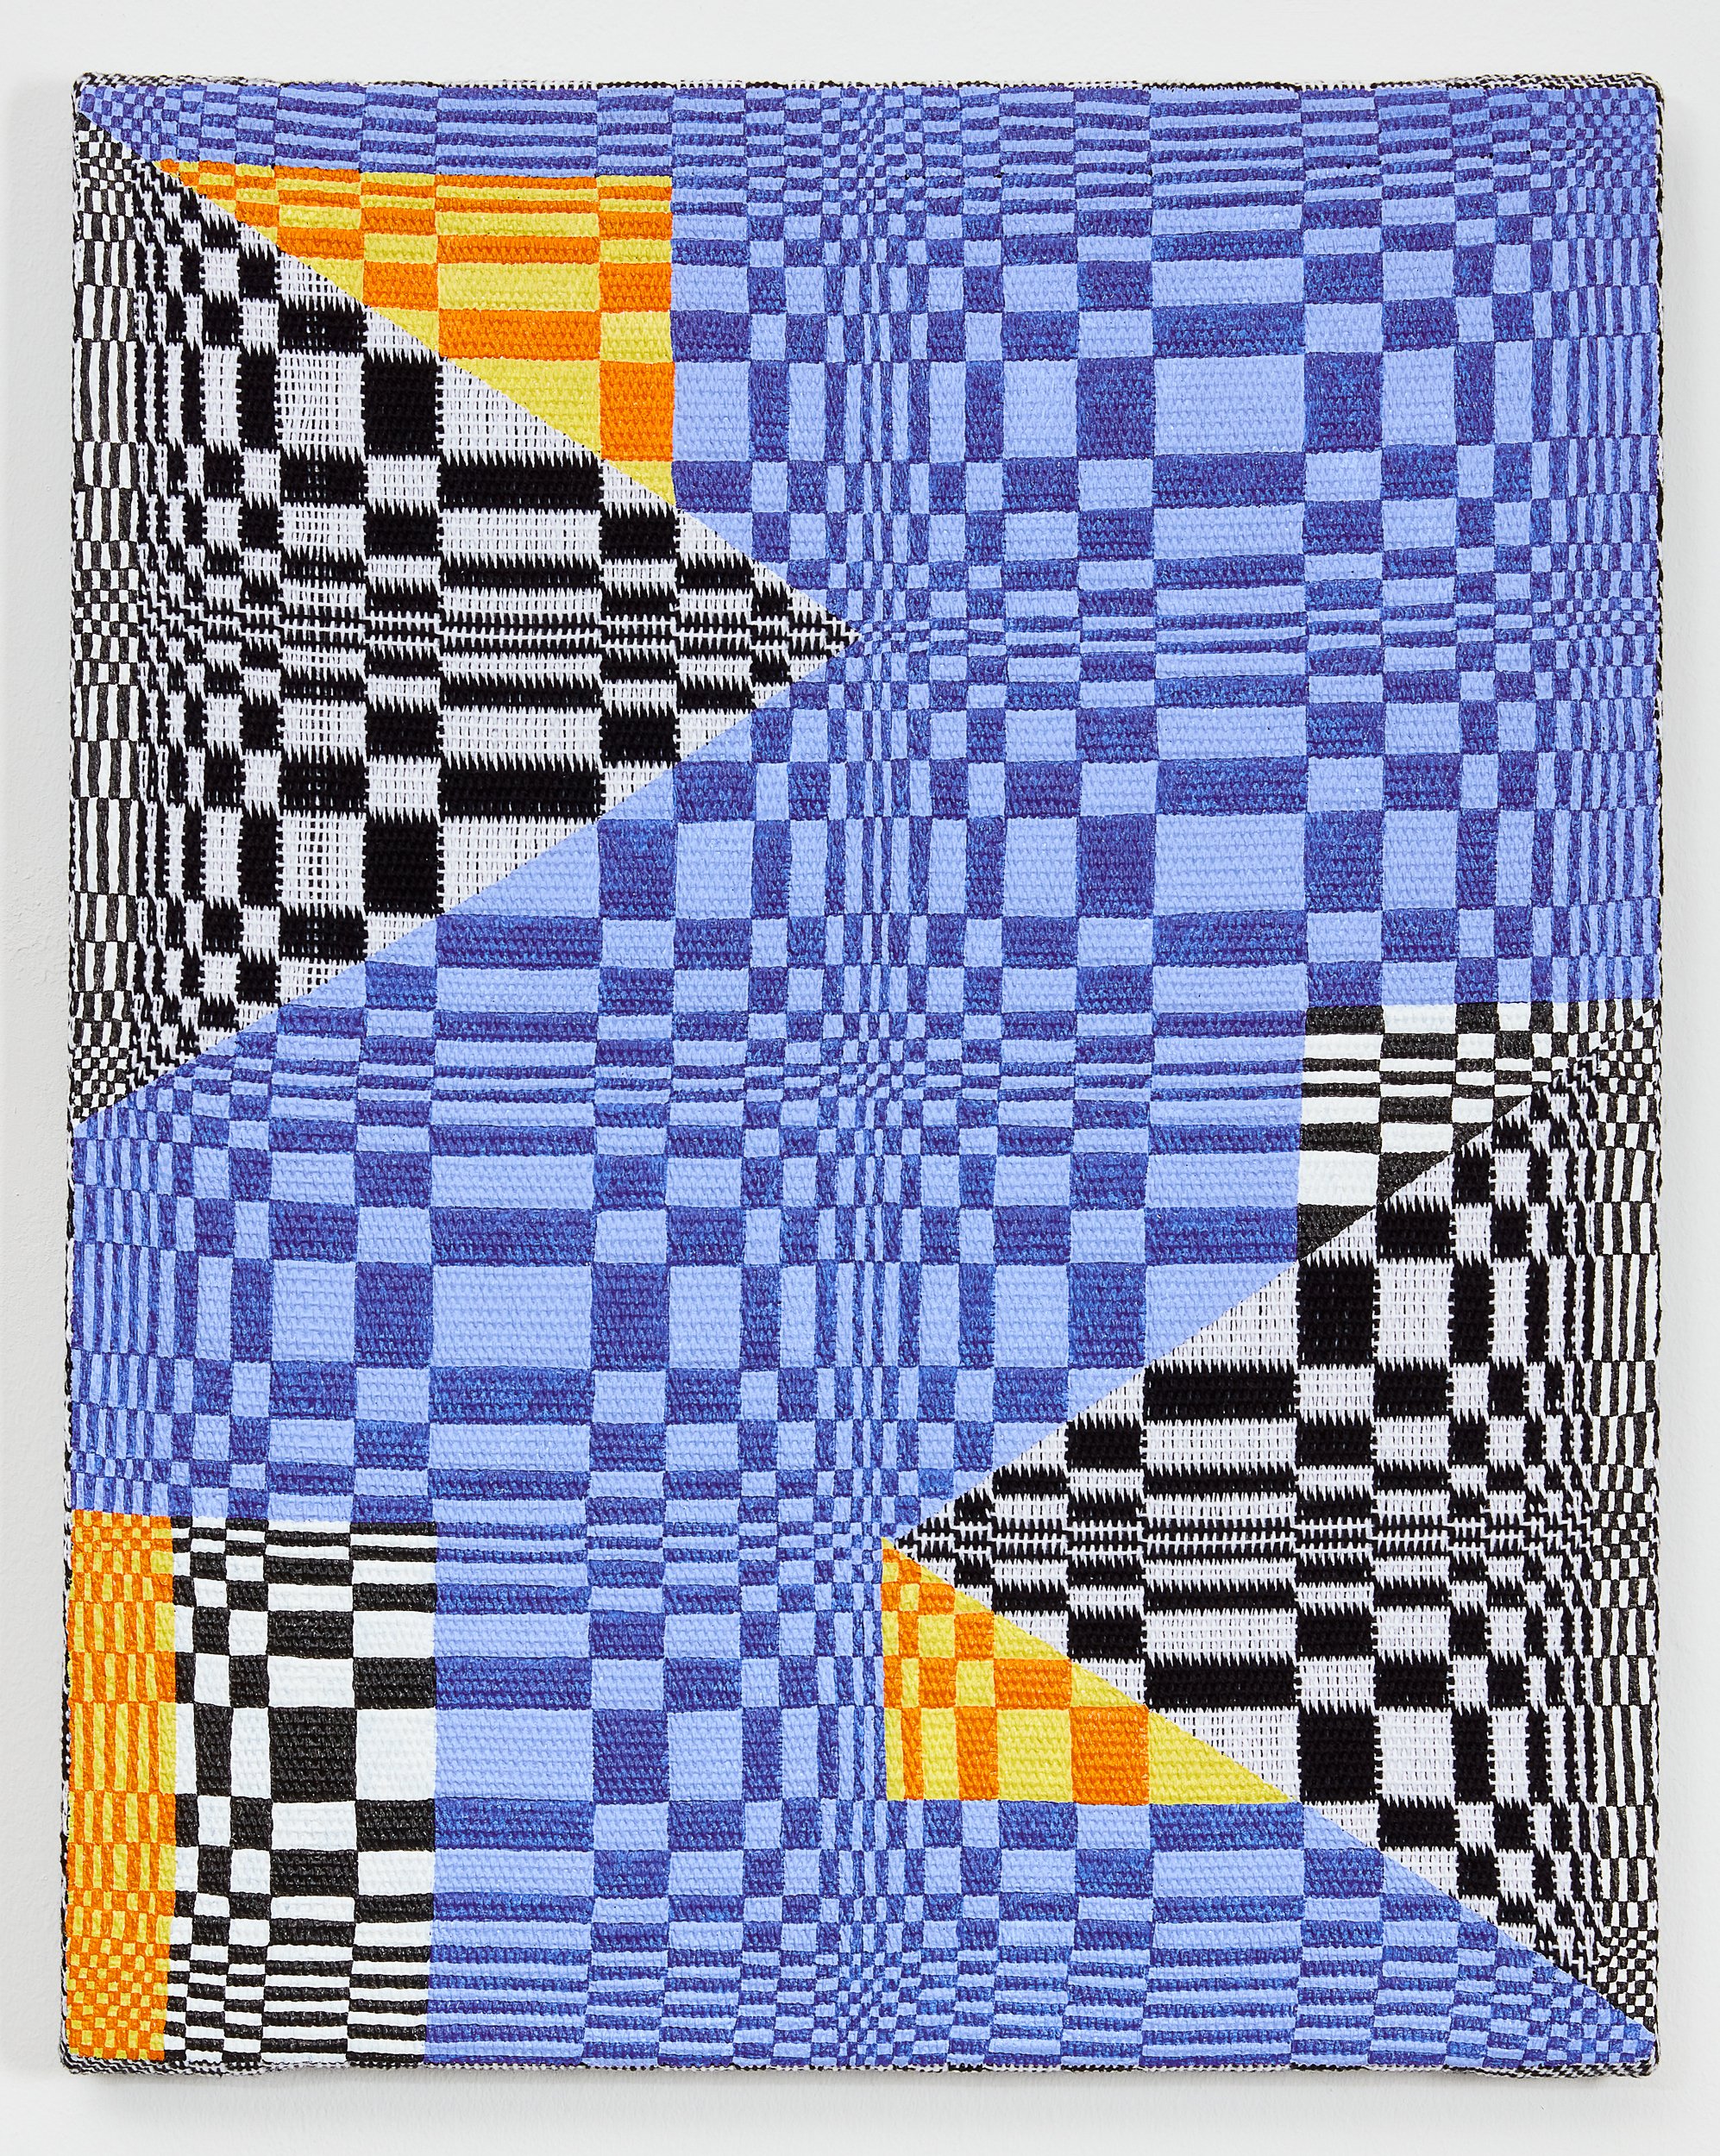 Samantha Bittman, Untitled, 2020, acrylic on hand woven textile, 20 x 16 in, 50.8 x 40.6 cm, (SBi302539) LR